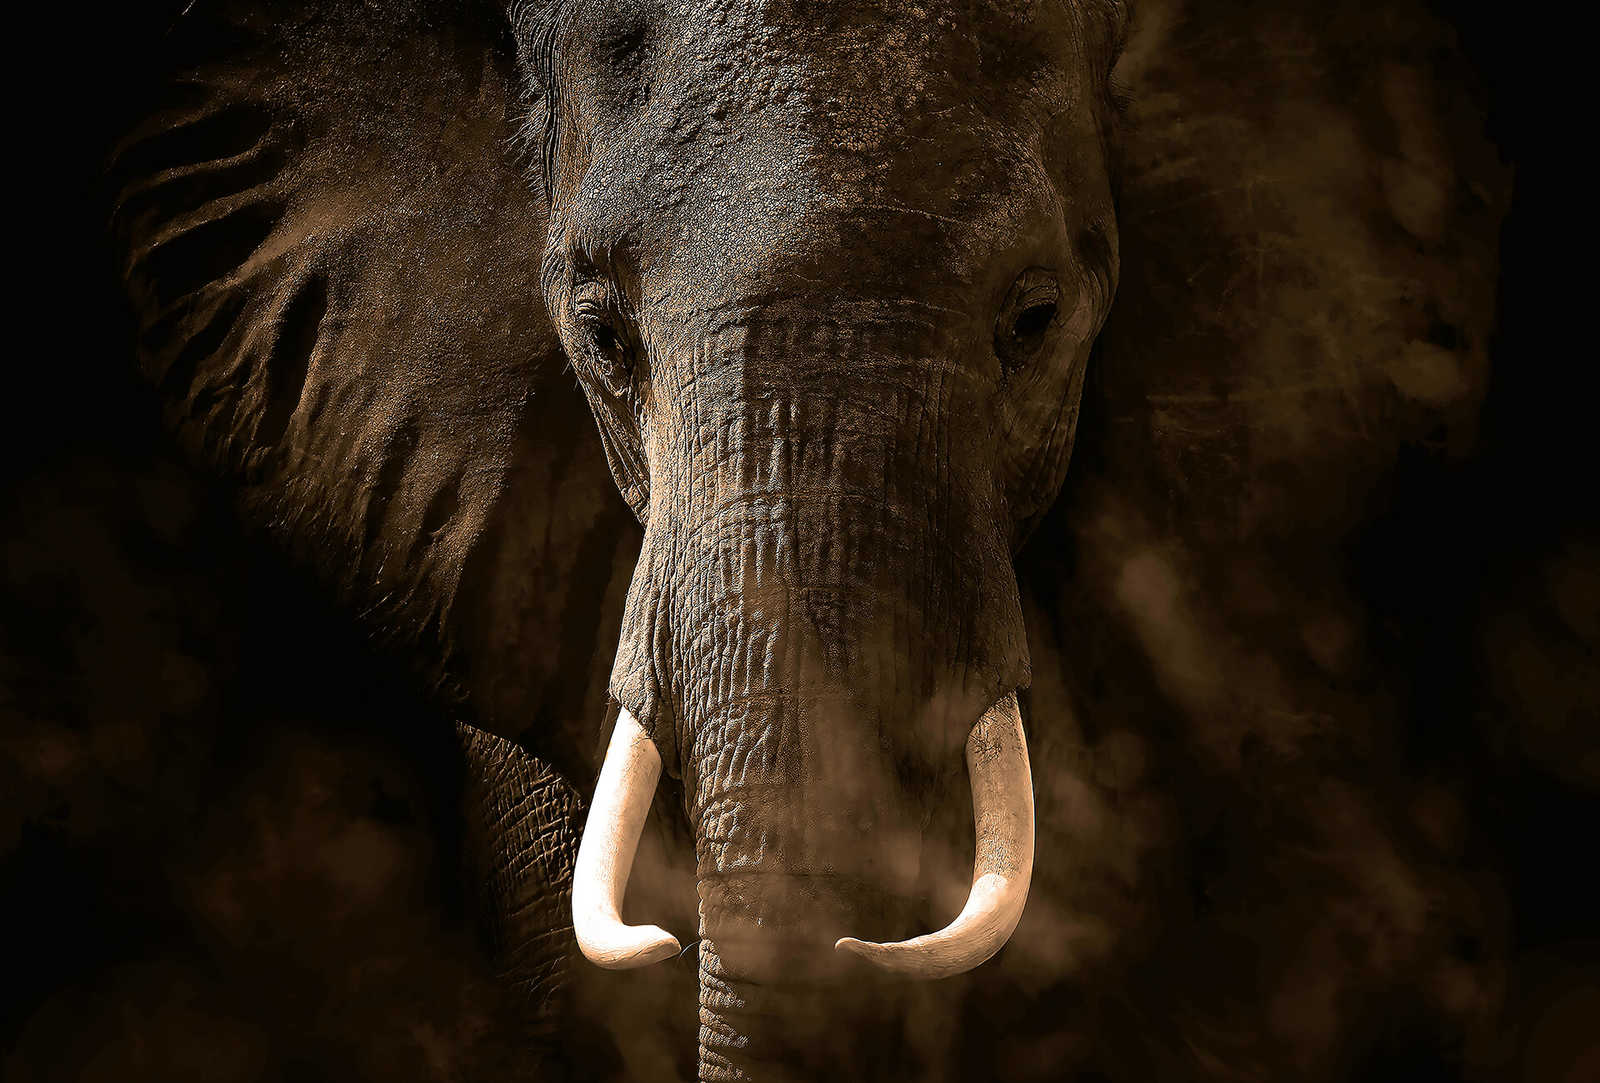         Photo wallpaper safari animal elephant - grey, brown, white
    